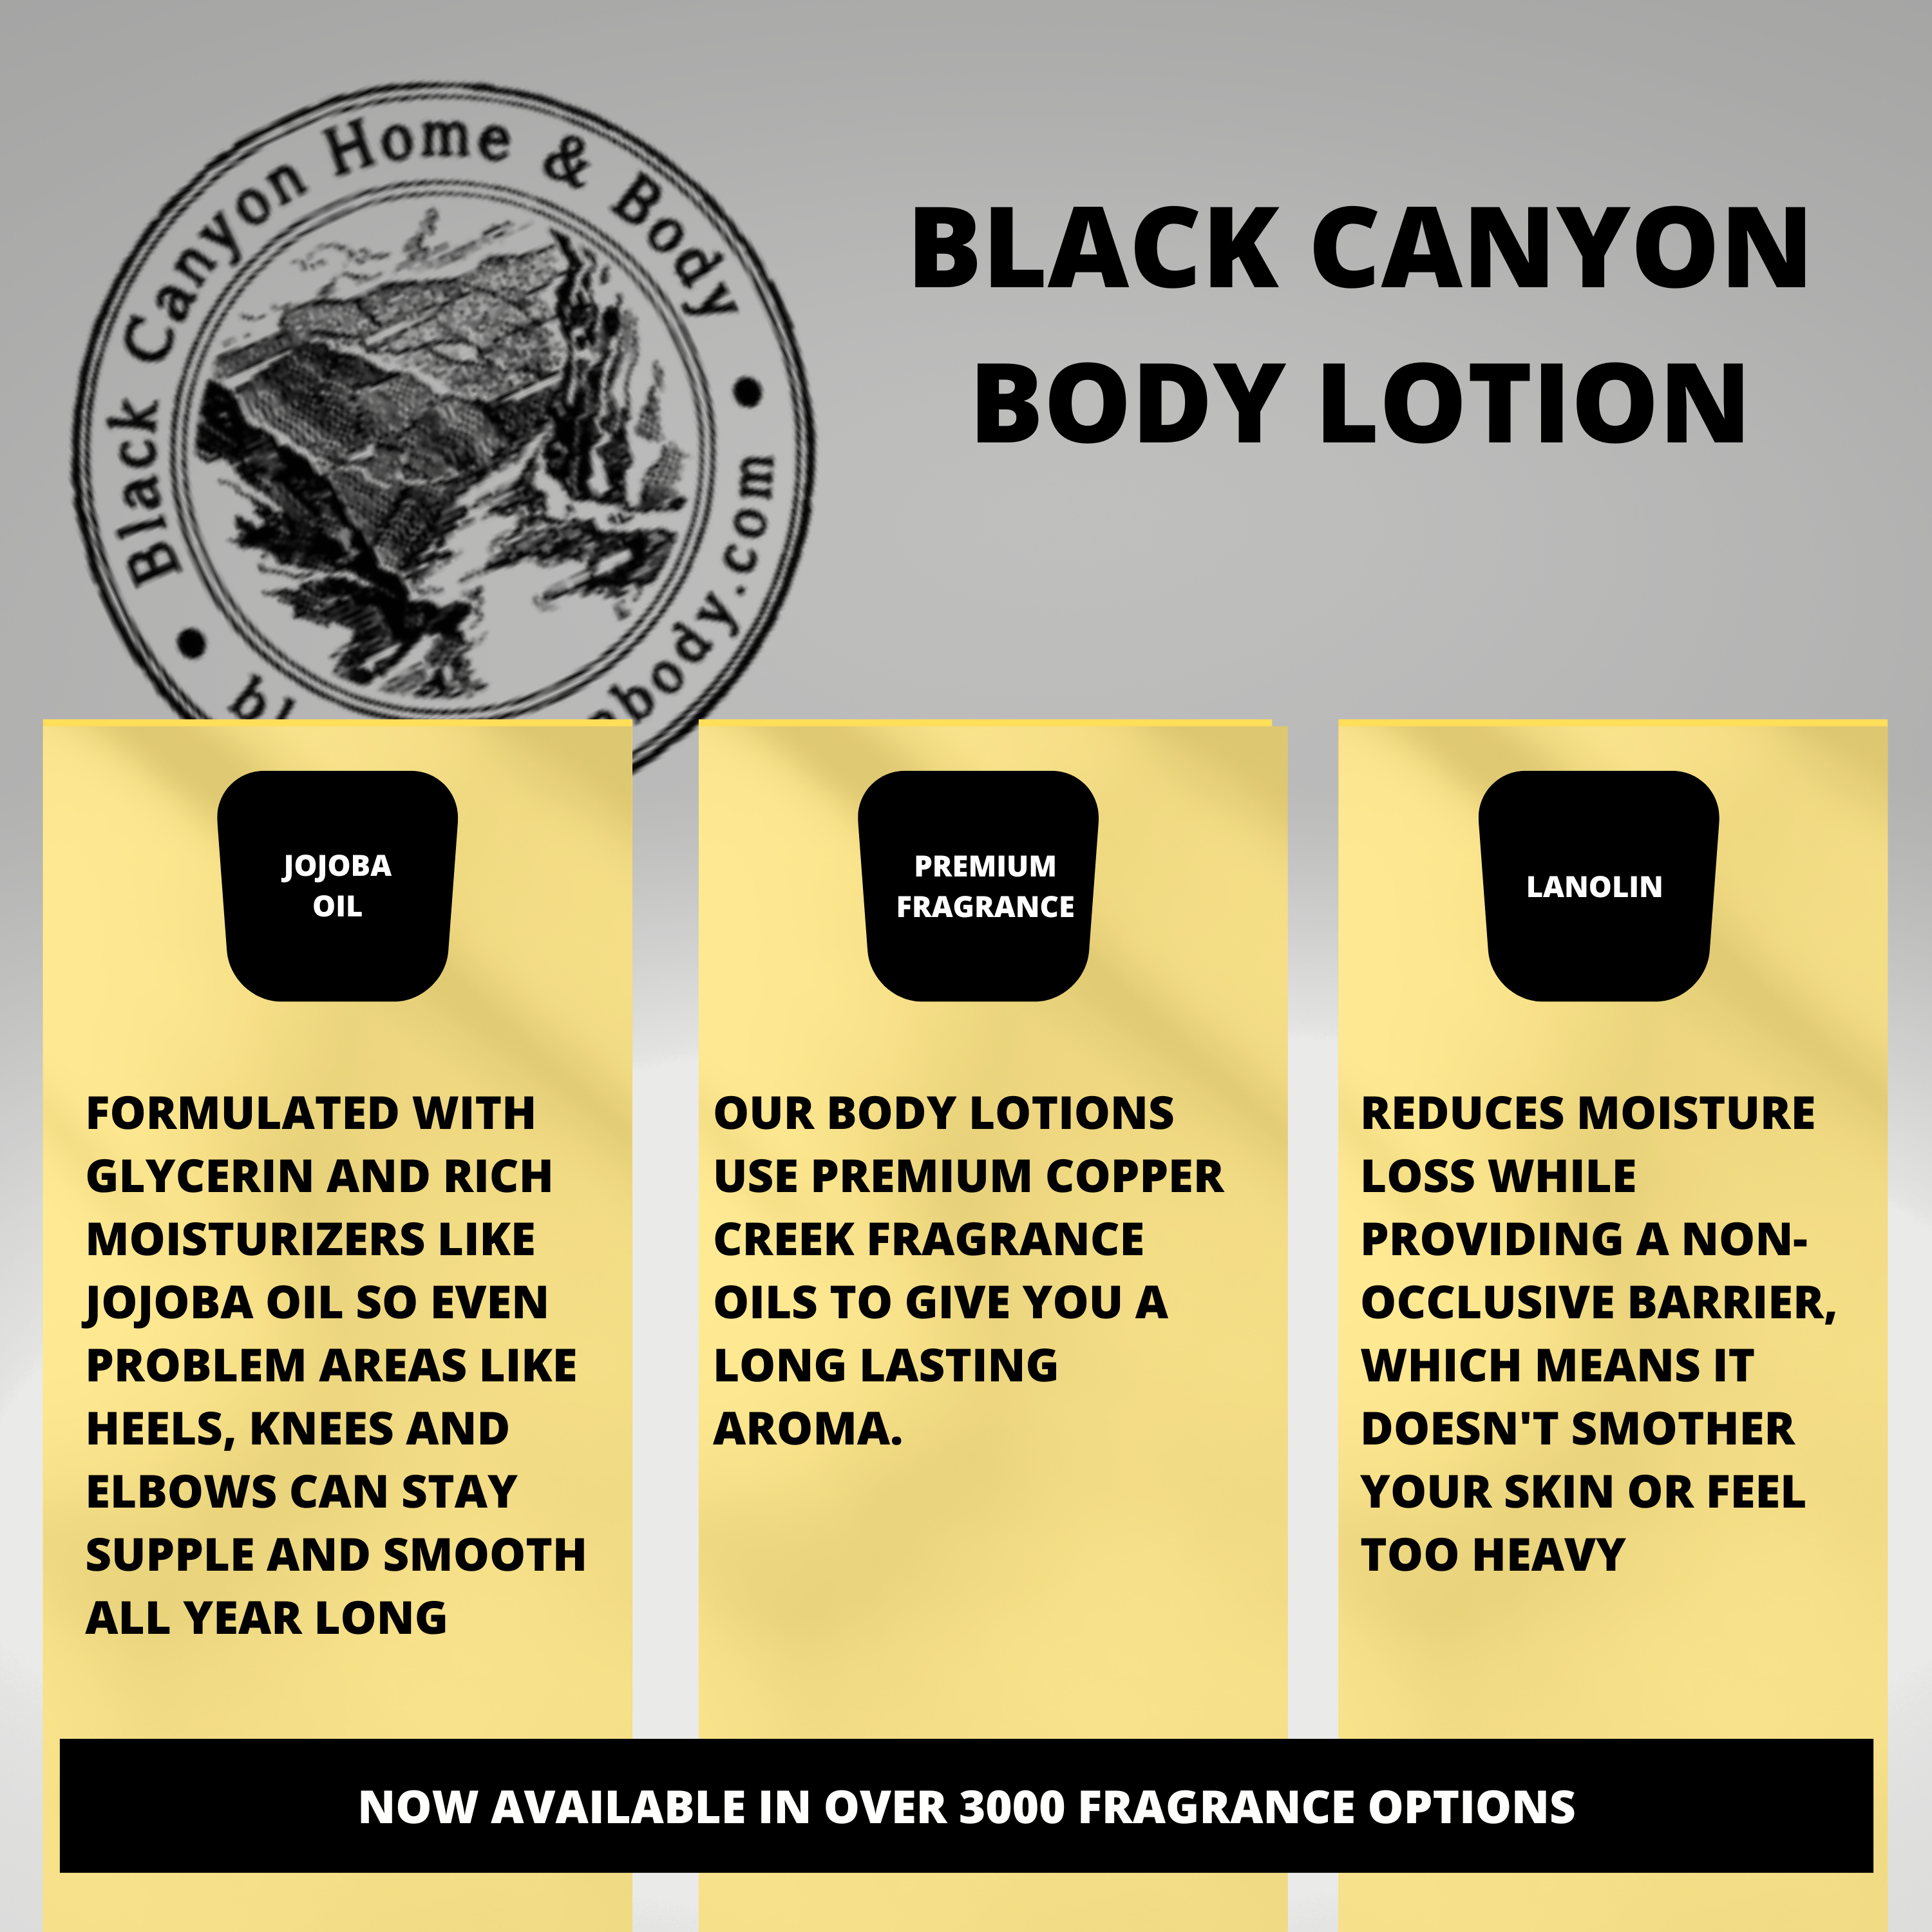 Black Canyon Black Cherry Vanilla Scented Luxury Body Lotion with Lanolin and Jojoba Oil